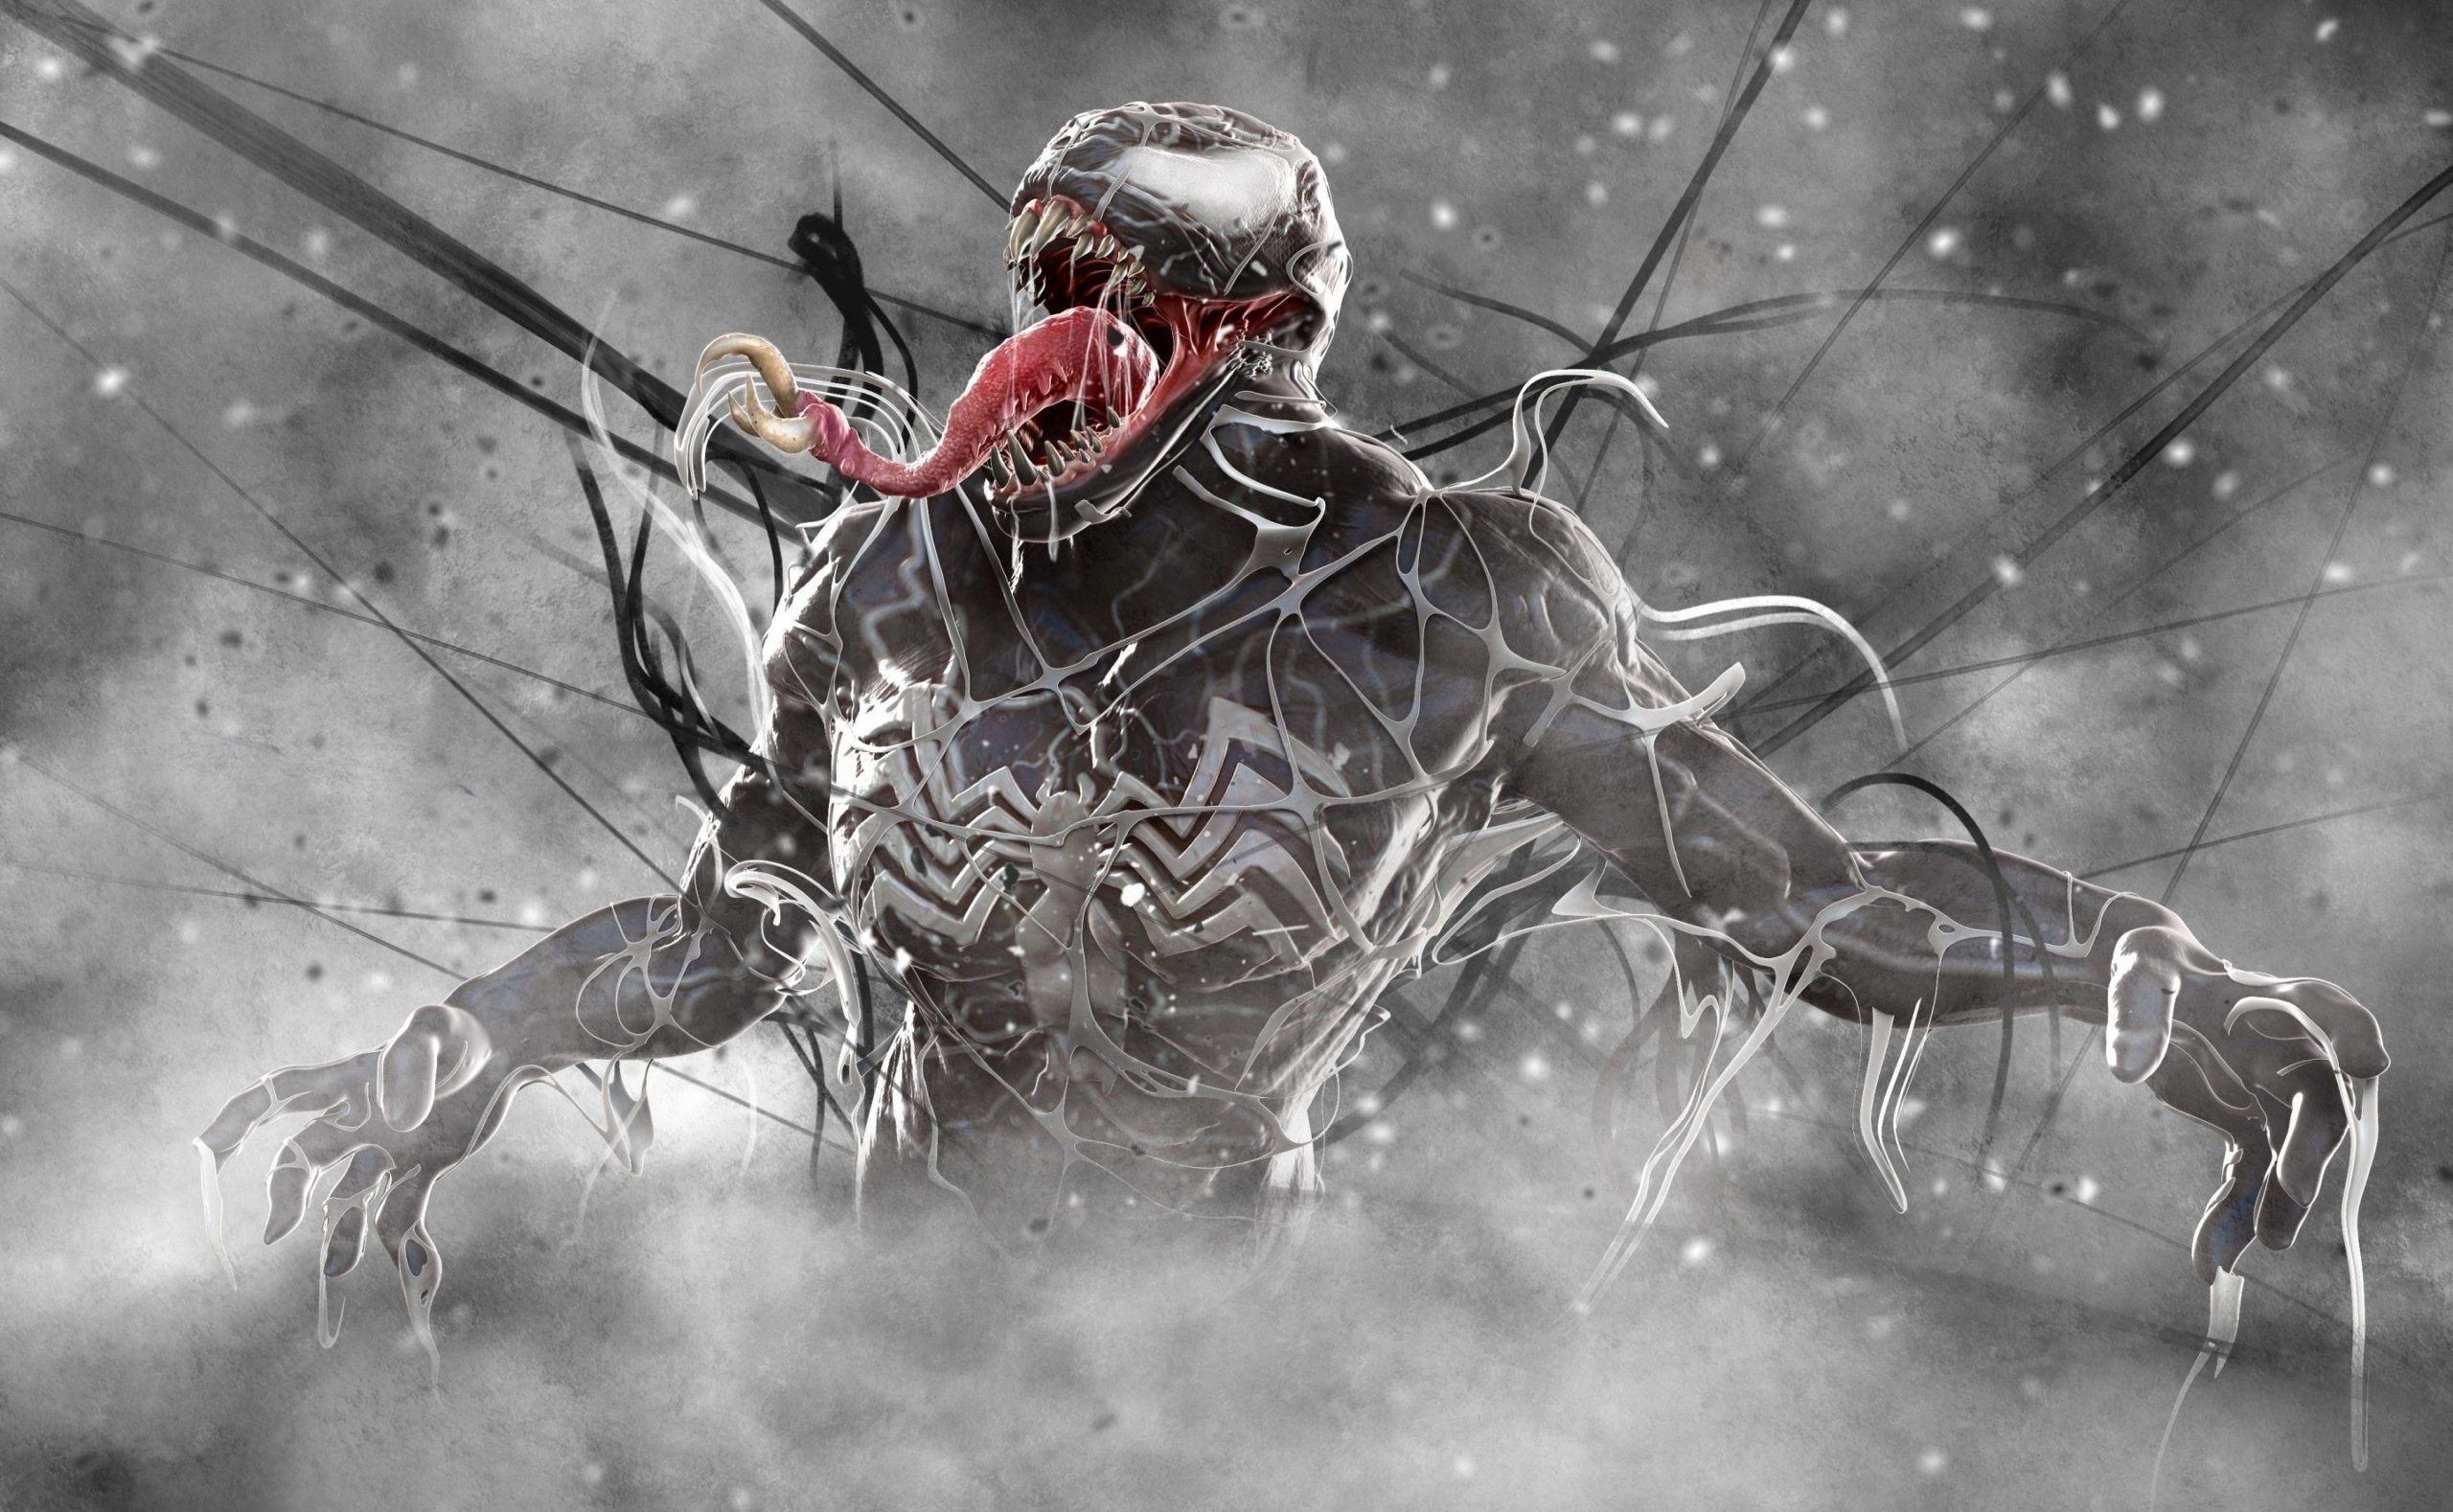 Spiderman Vs Venom Wallpaper